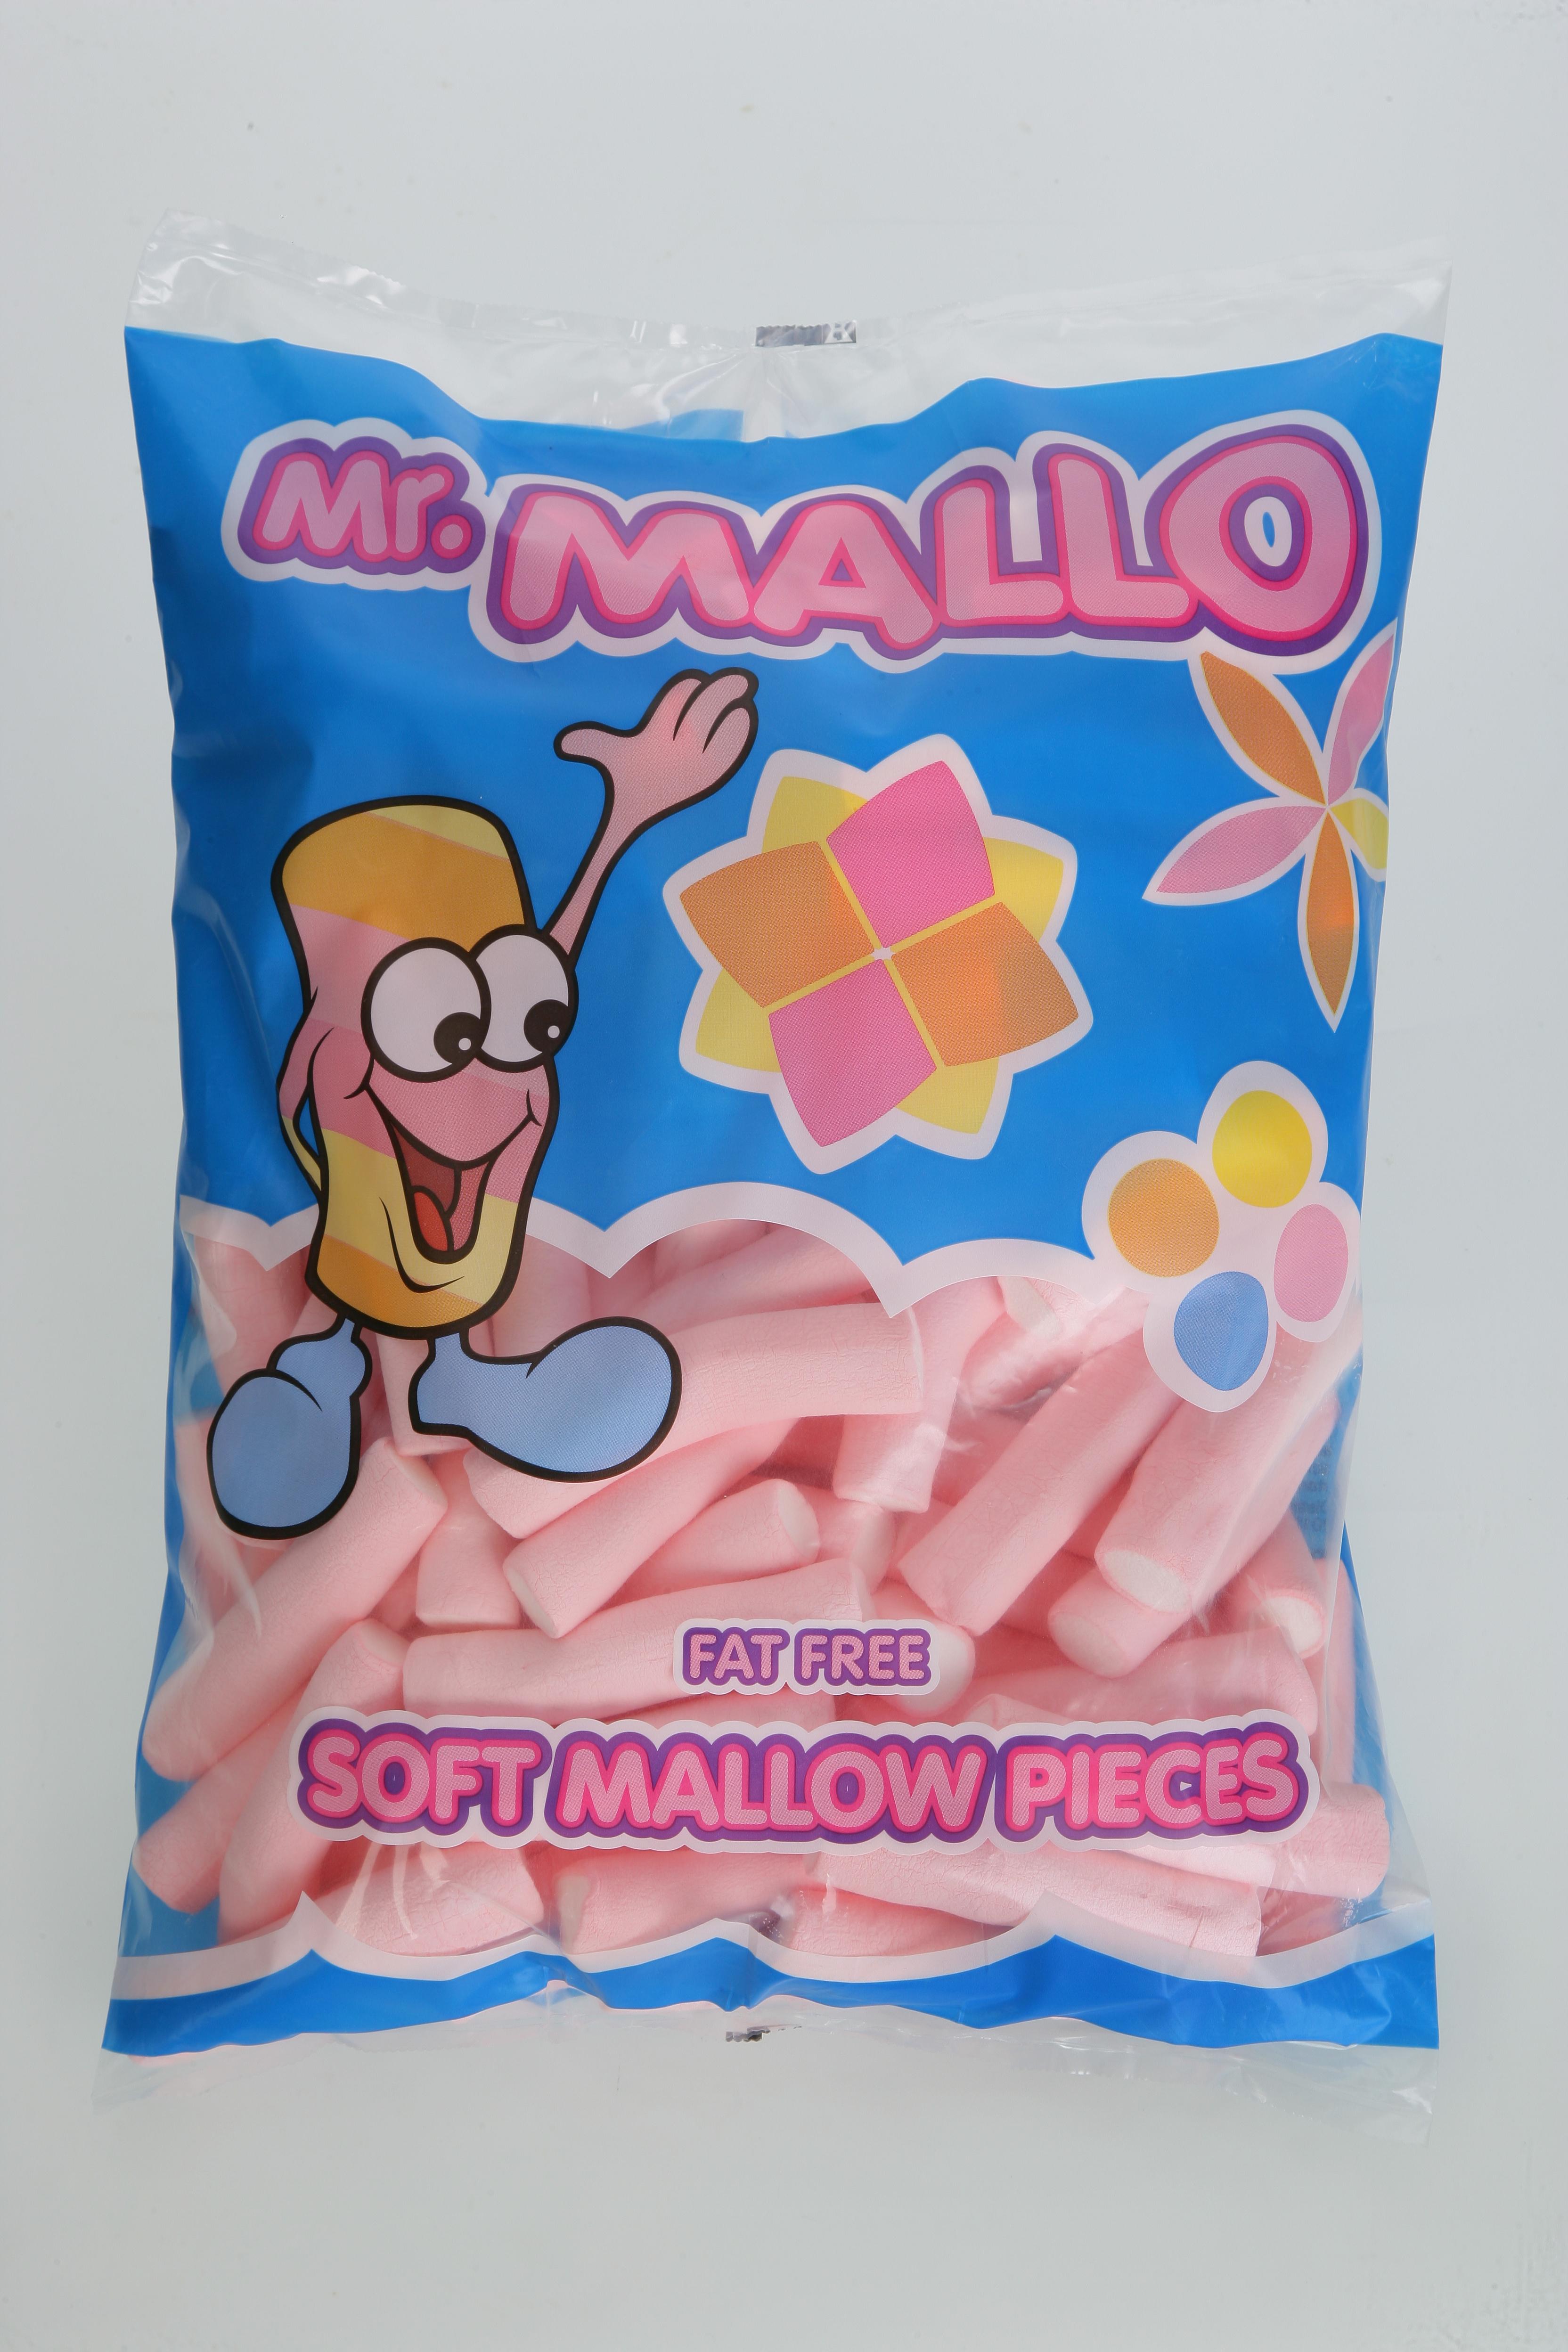 Mr. Mallo pillow bag 700g - 1,1kg